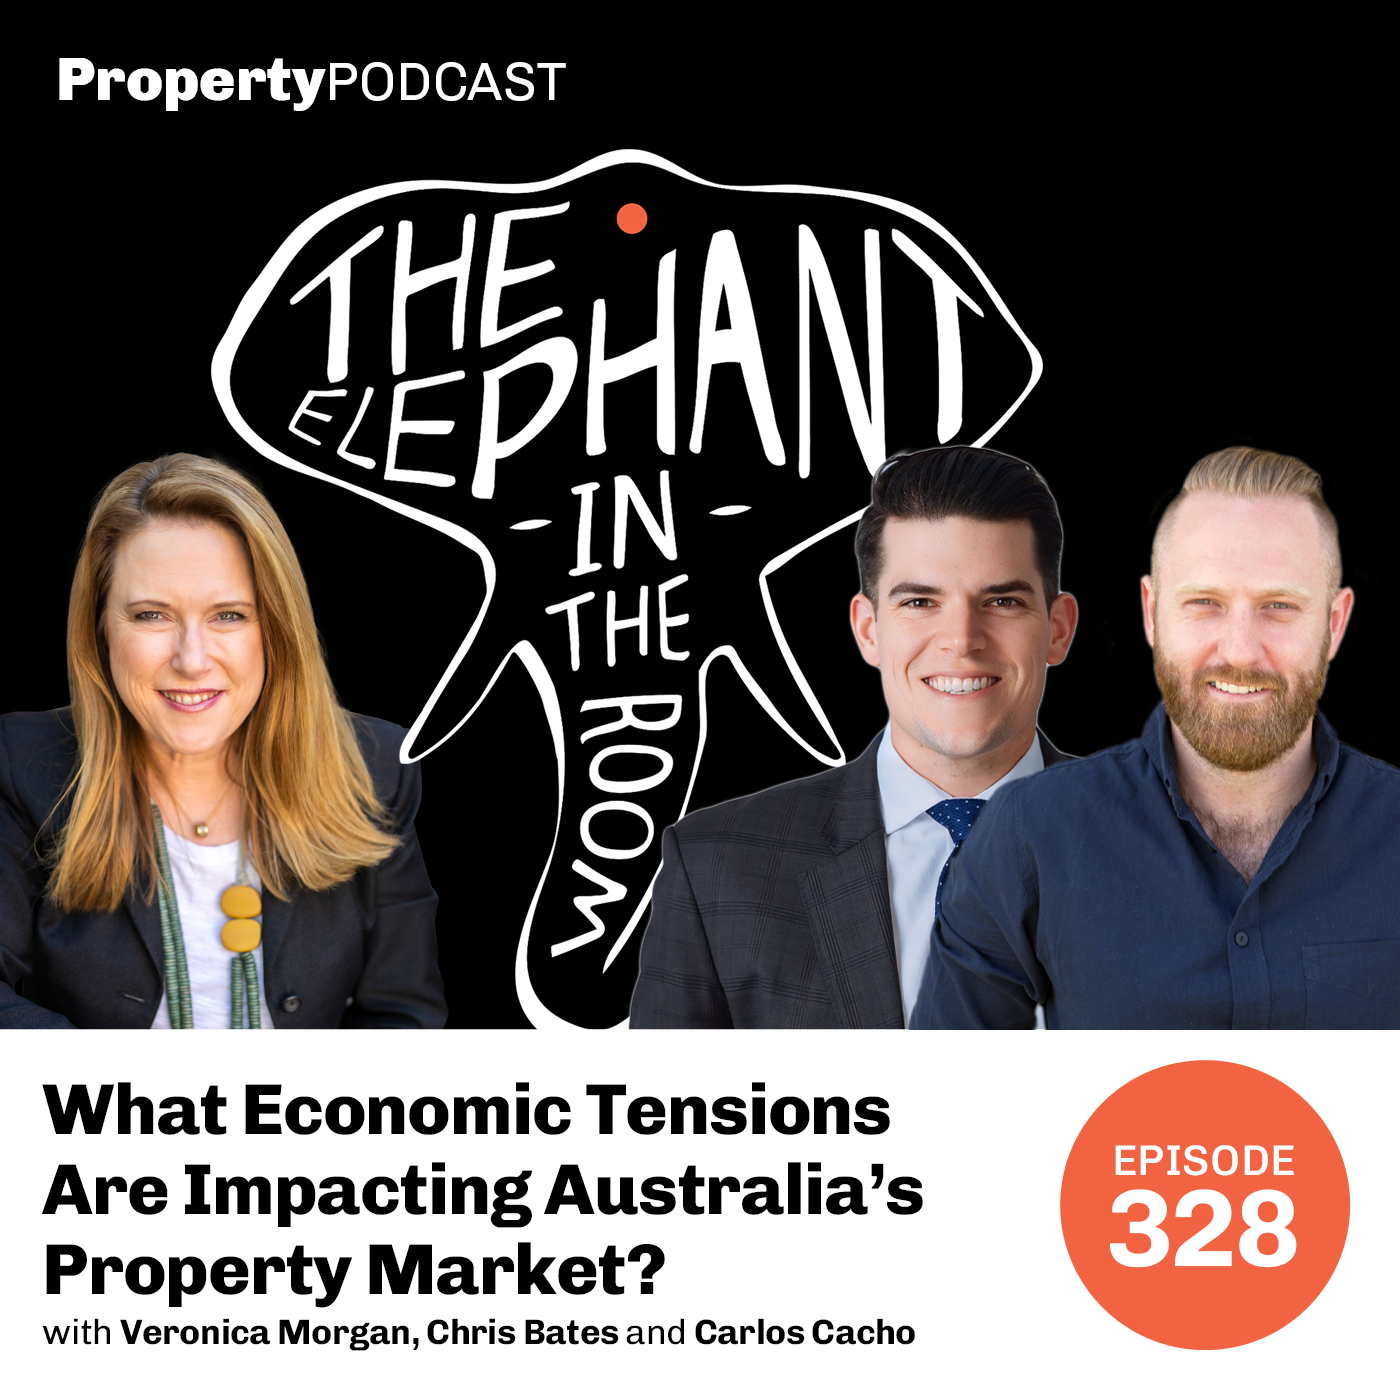 What Economic Tensions Are Impacting Australia’s Property Market?